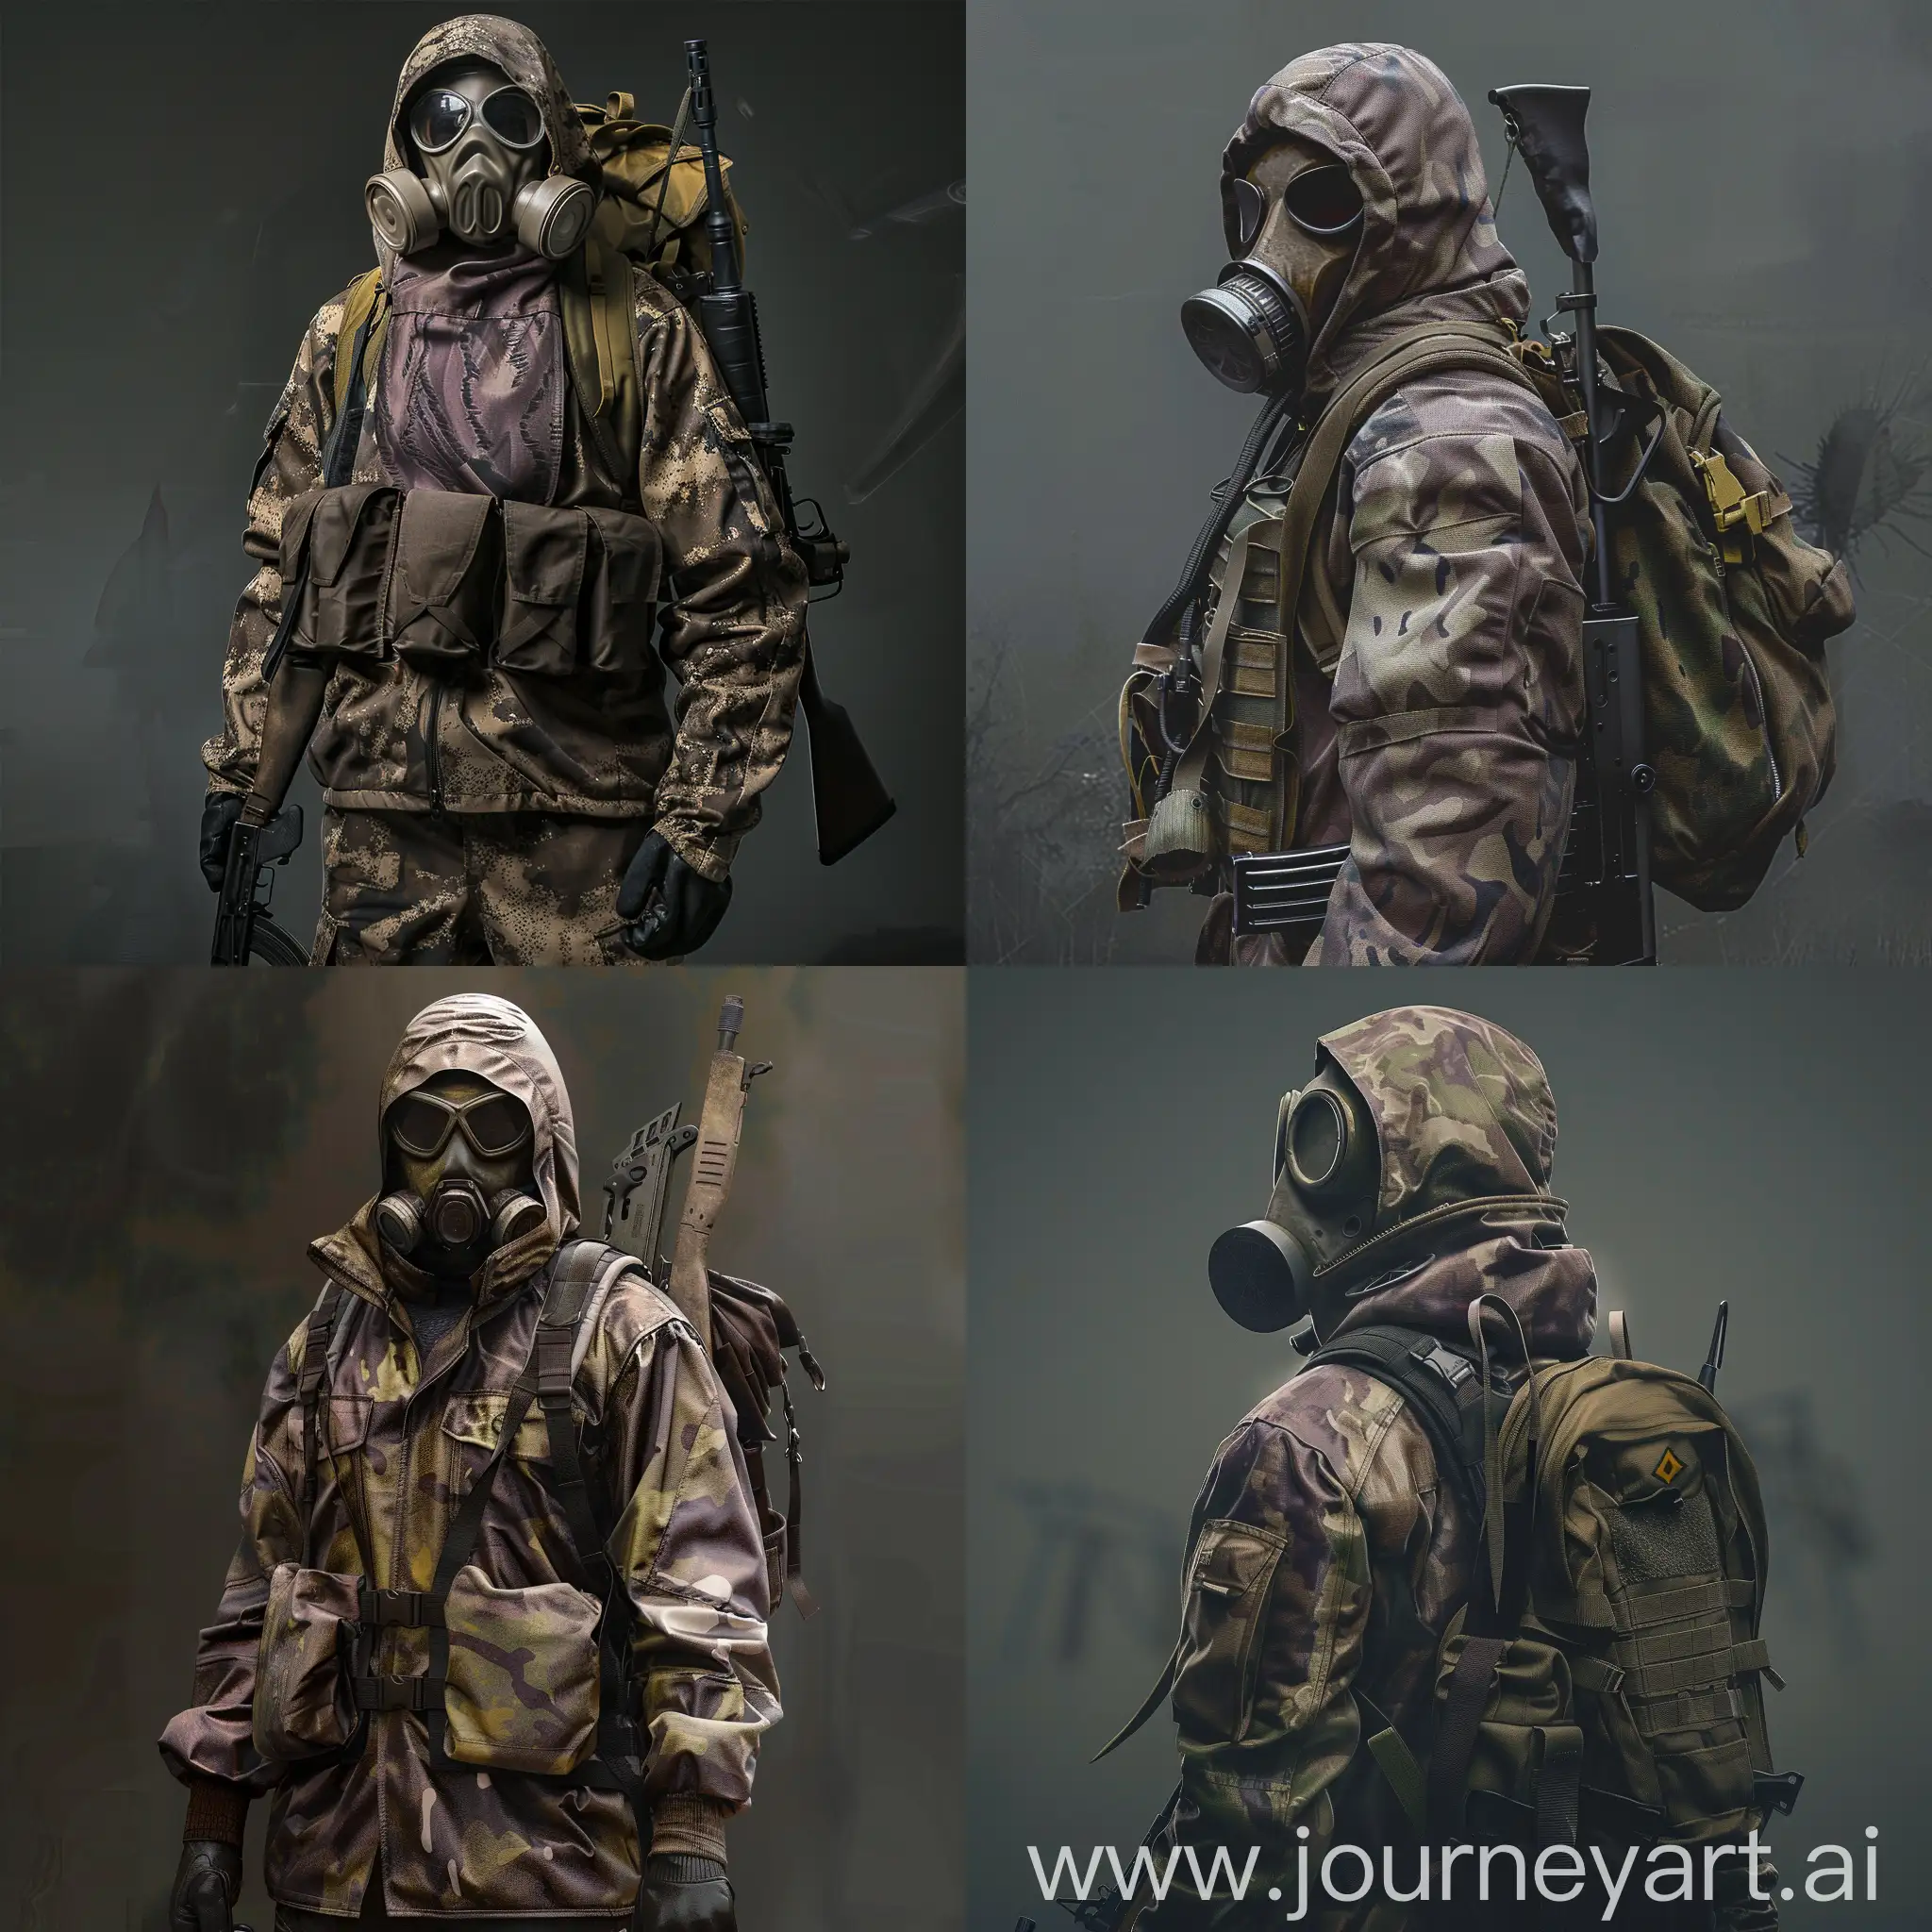 Stalker from game STALKER, military jacket, gasmask, military vest on body, weapon on the back.